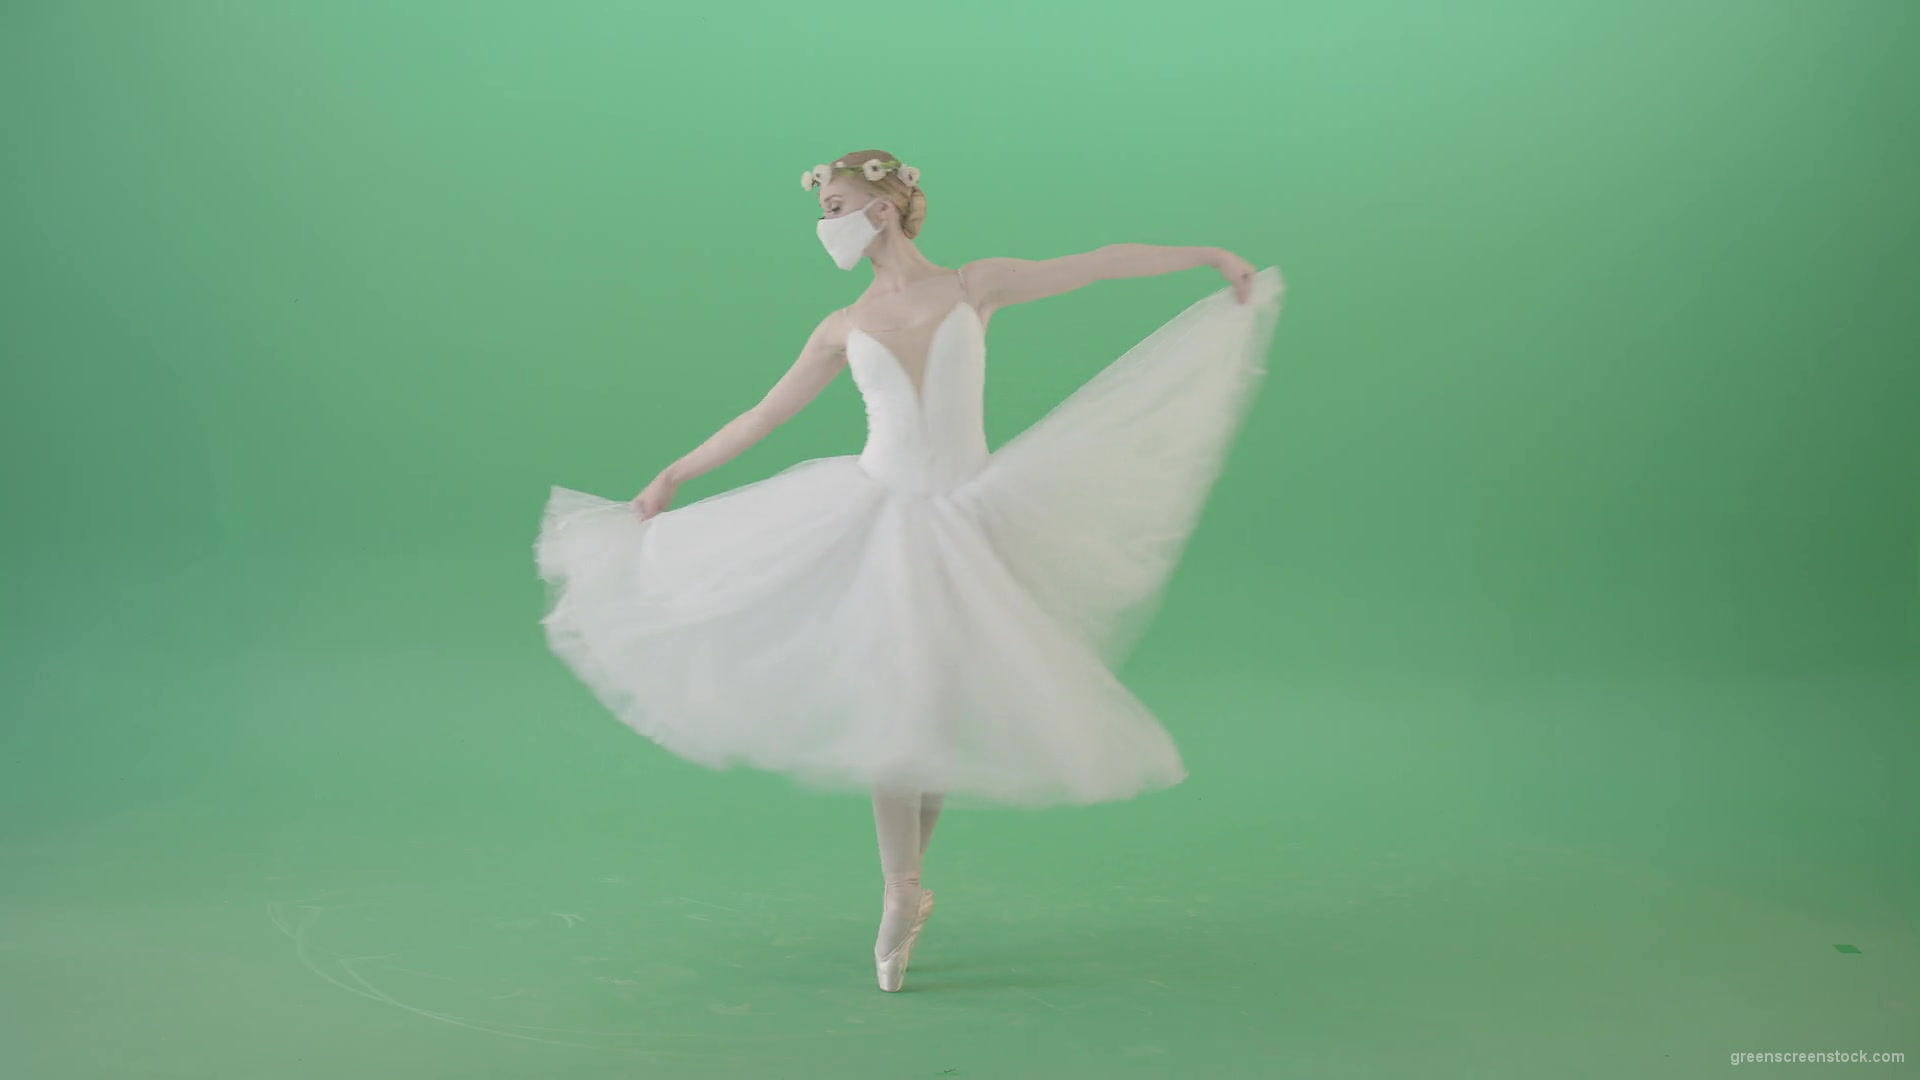 Ballet-Dancing-Girl-in-Corona-Virus-Mask-spinning-on-green-screen-4K-Video-Footage-1920_007 Green Screen Stock